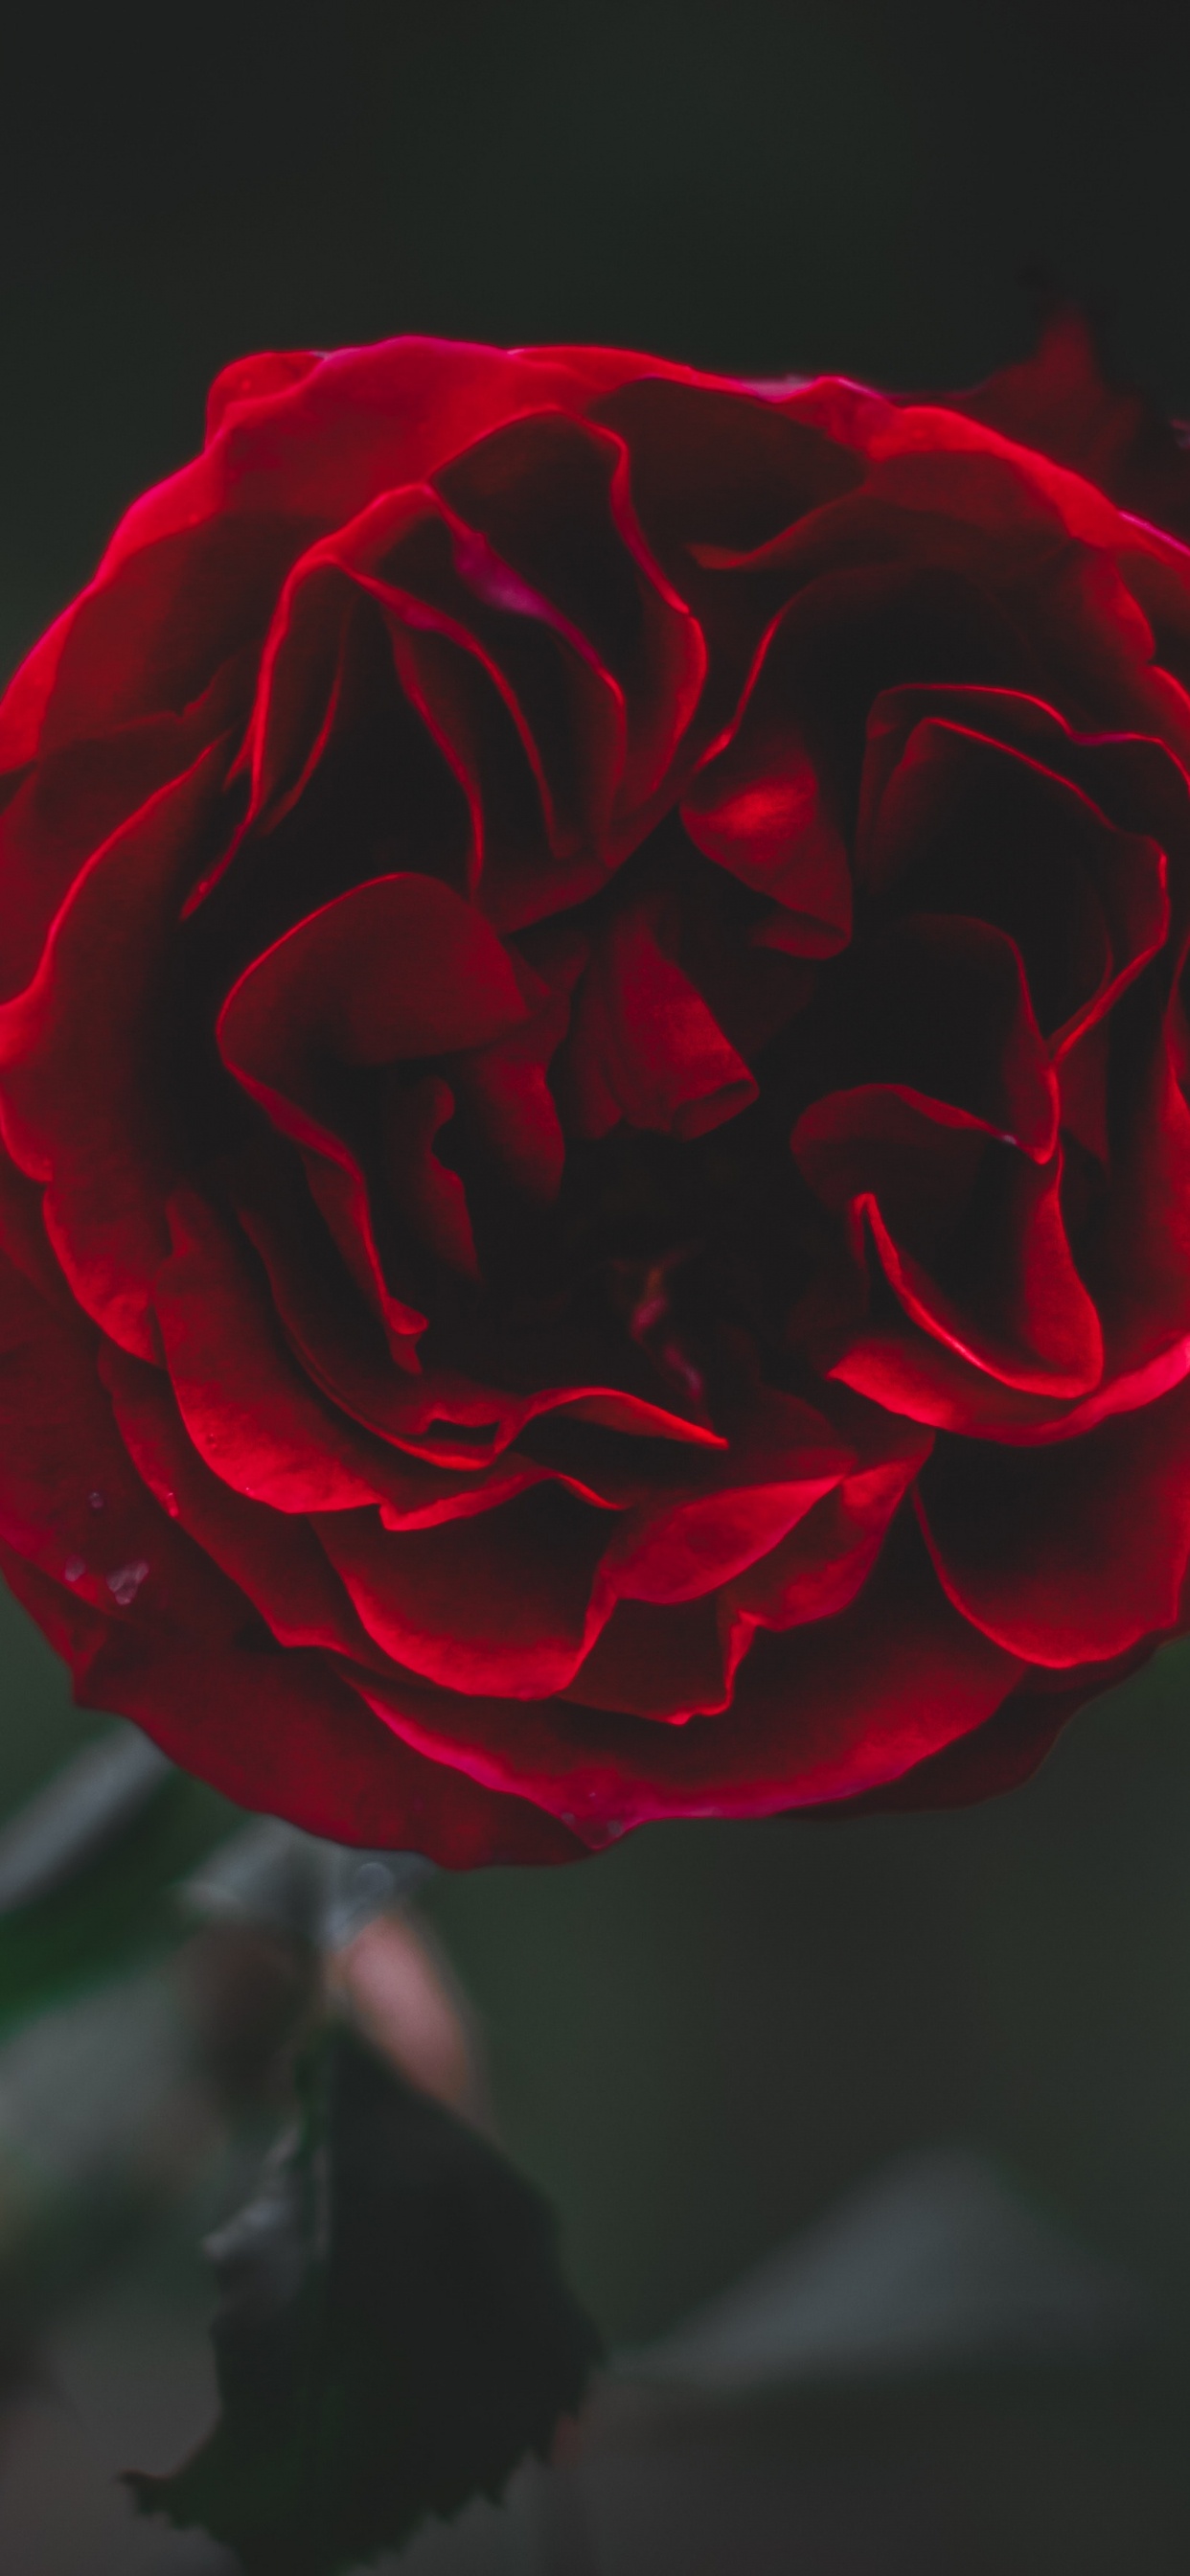 Rose Rouge en Fleur en Photographie Rapprochée. Wallpaper in 1242x2688 Resolution